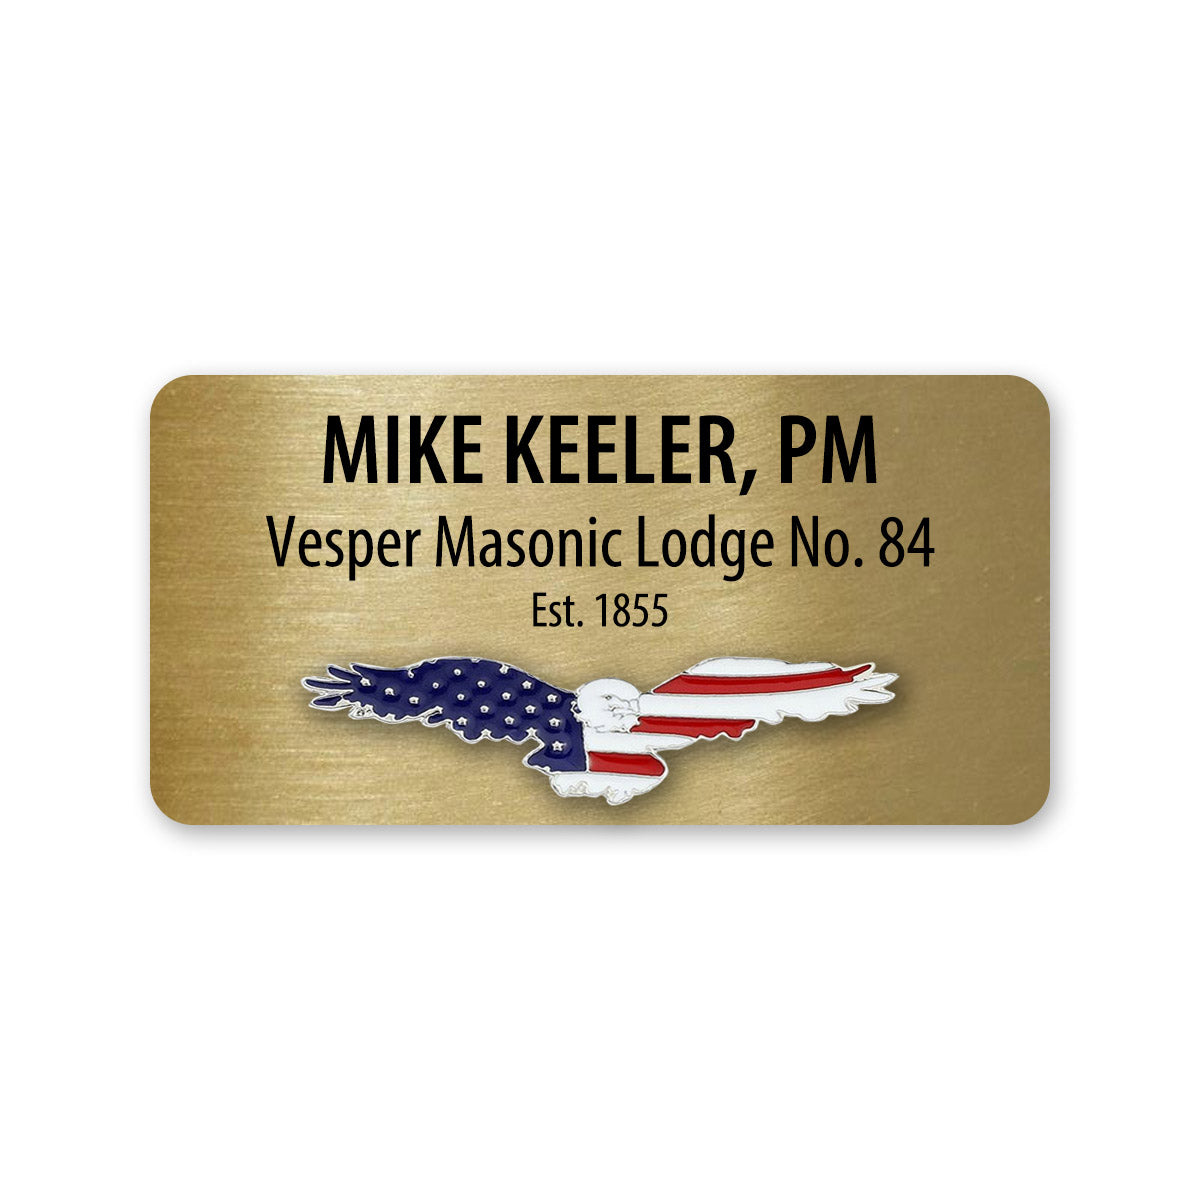 Vesper Masonic Lodge No. 84 Name Tag with USA Eagle Enamel Badge